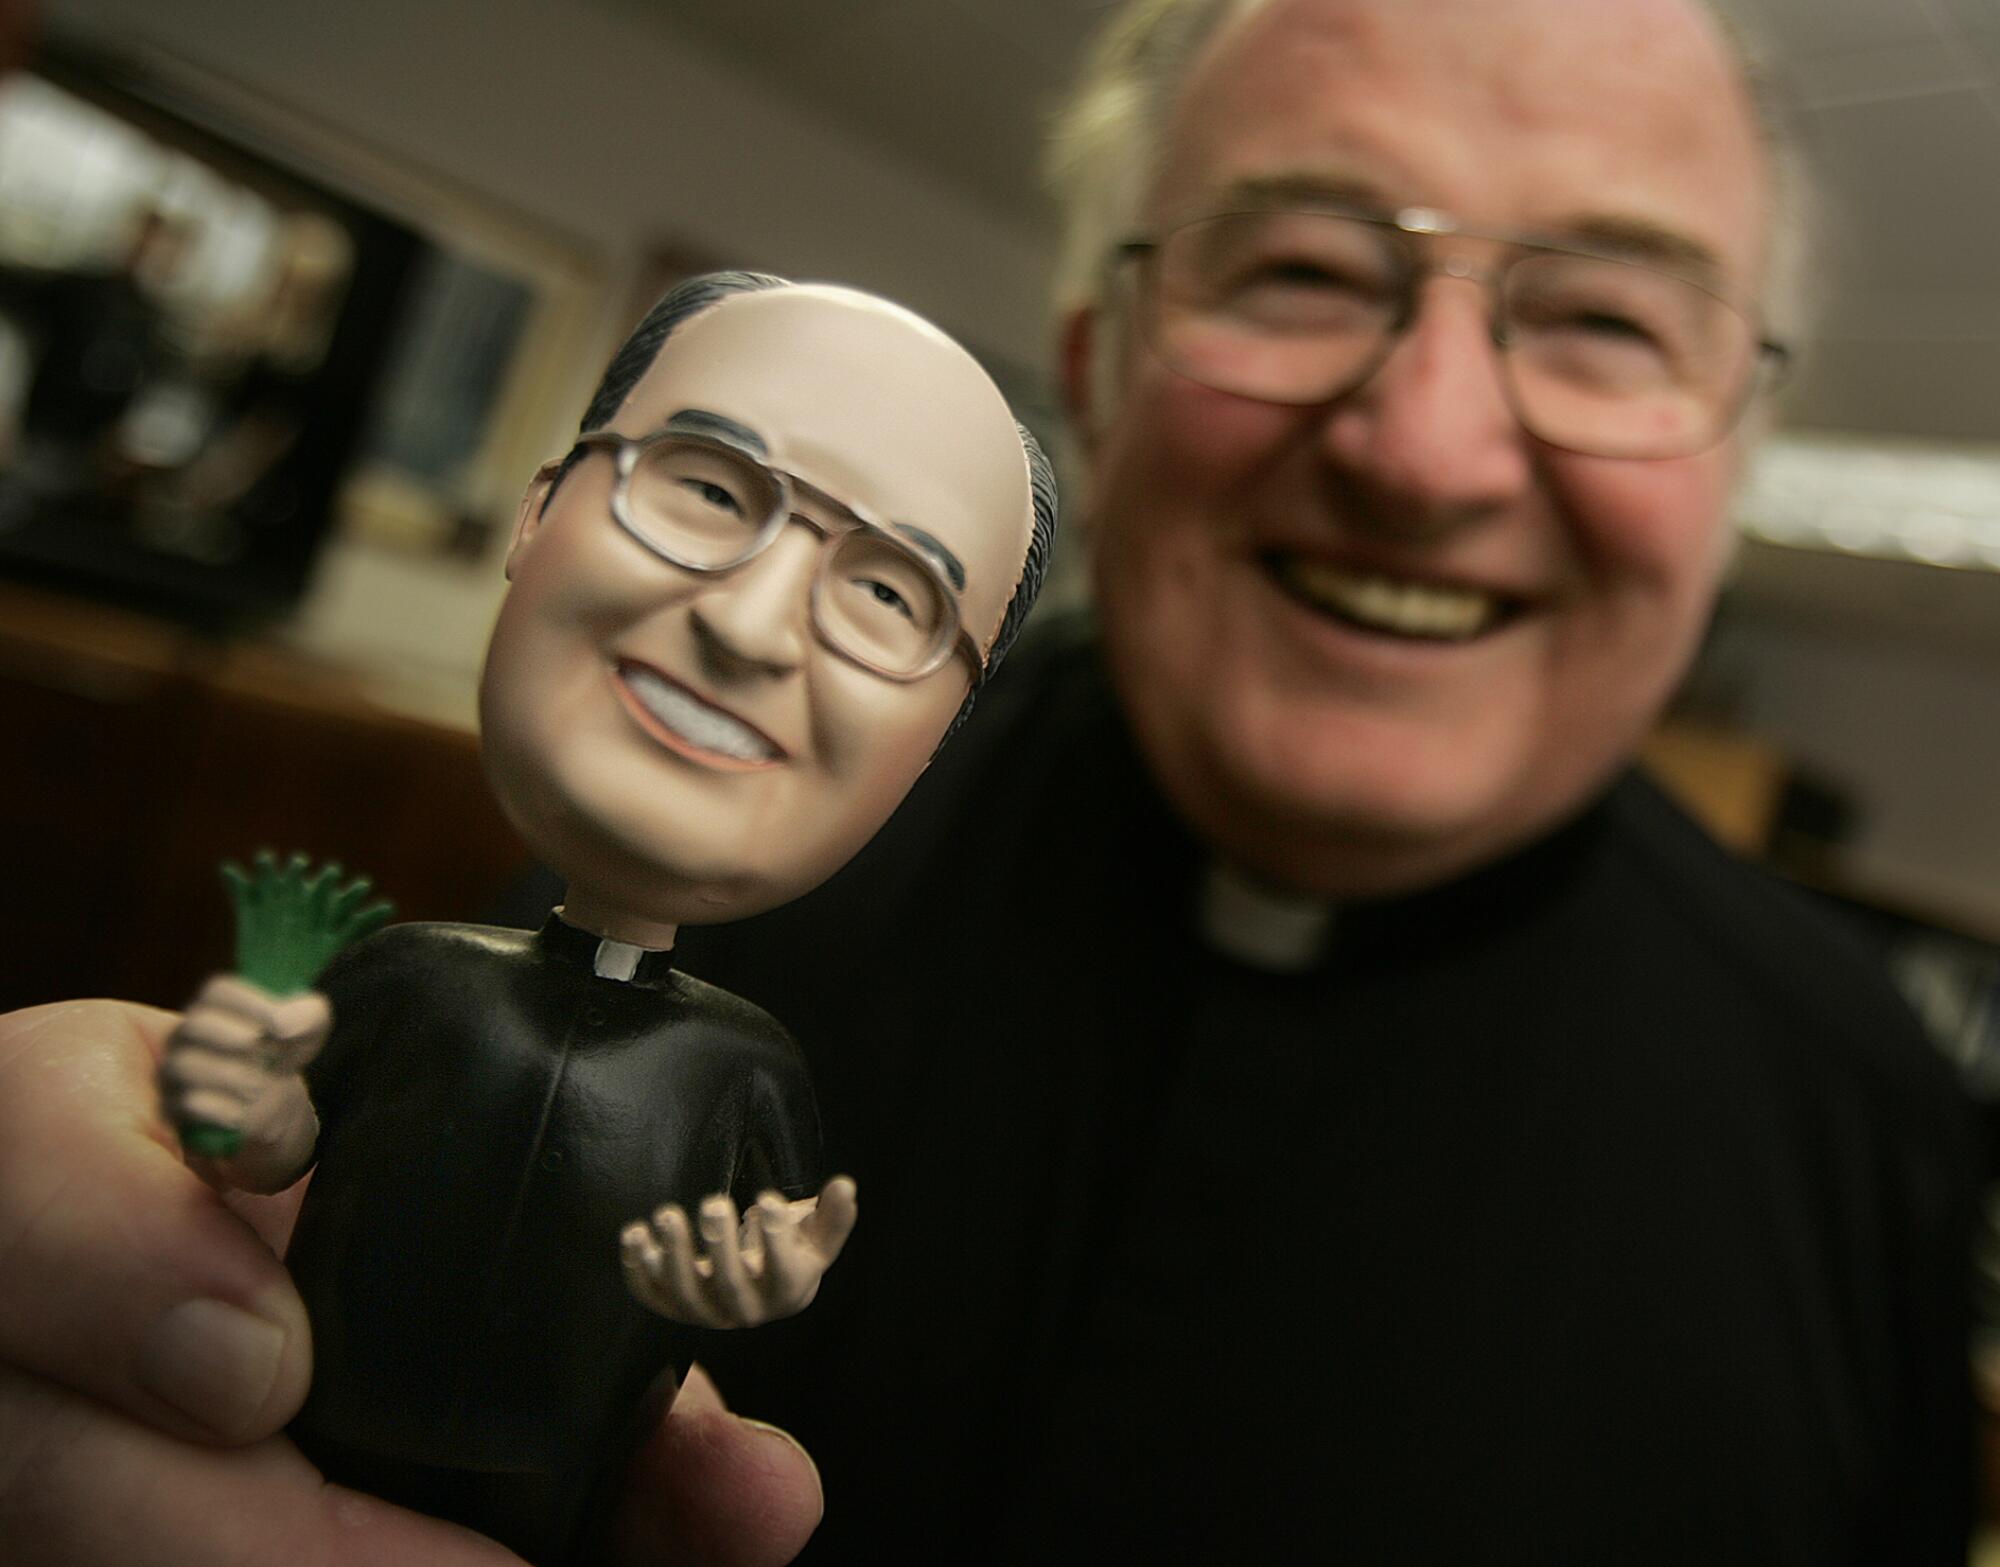 Father Joe Carroll holds a bobblehead doll of himself